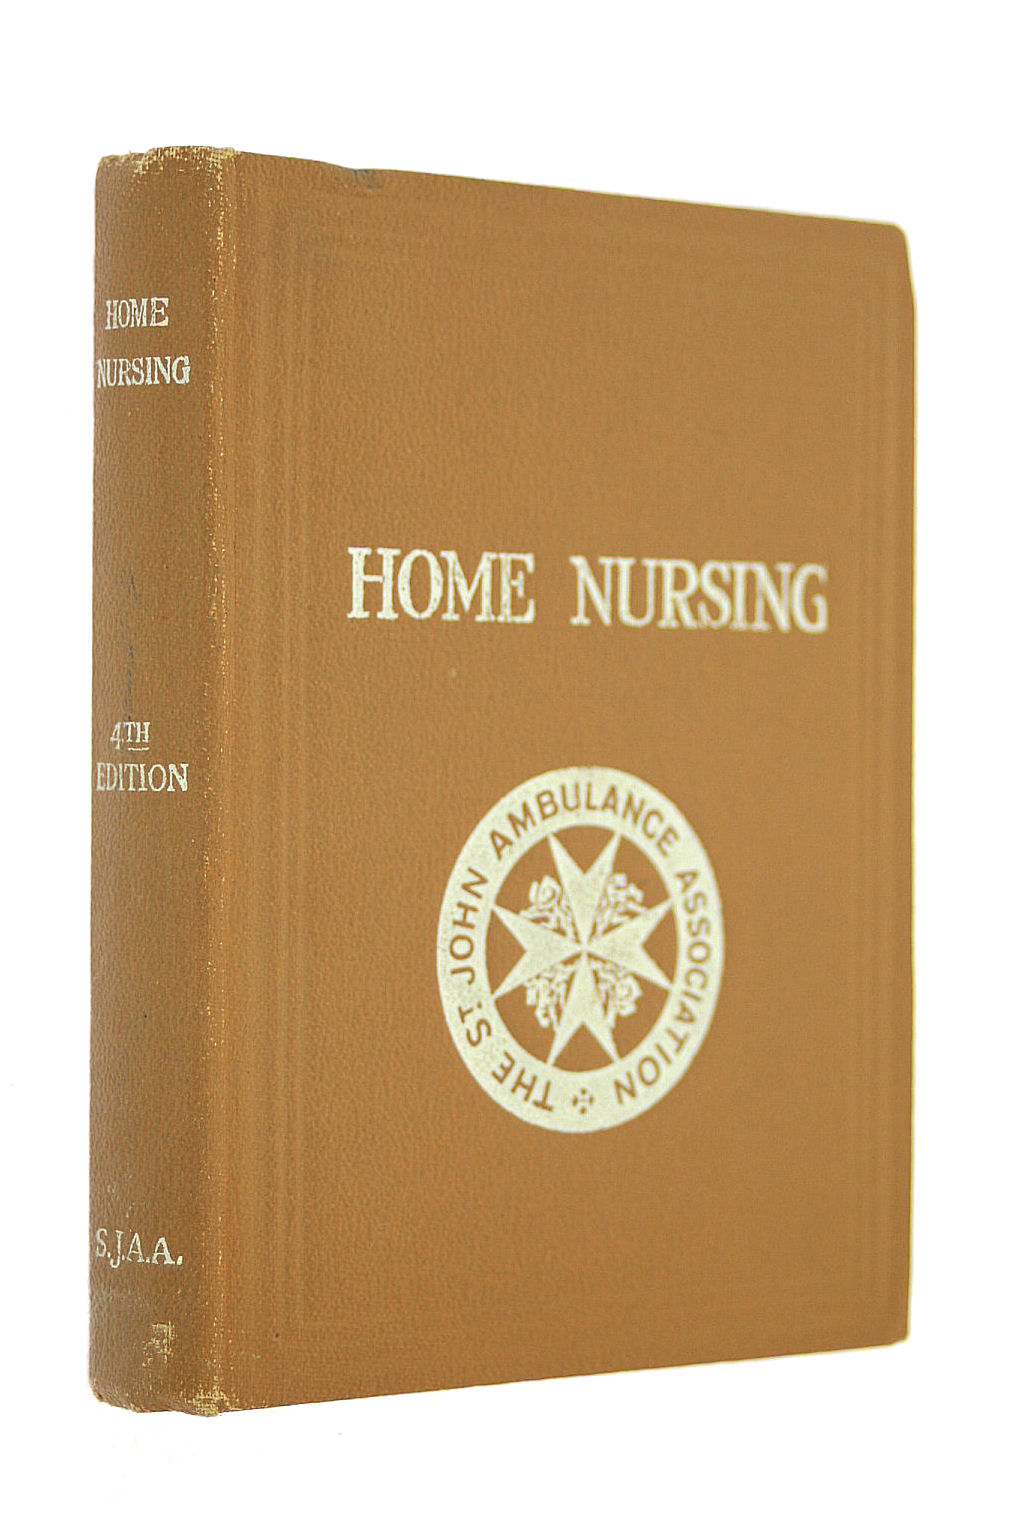 ANON - Home Nursing: The Authorised Textbook of the St John Ambulance Association